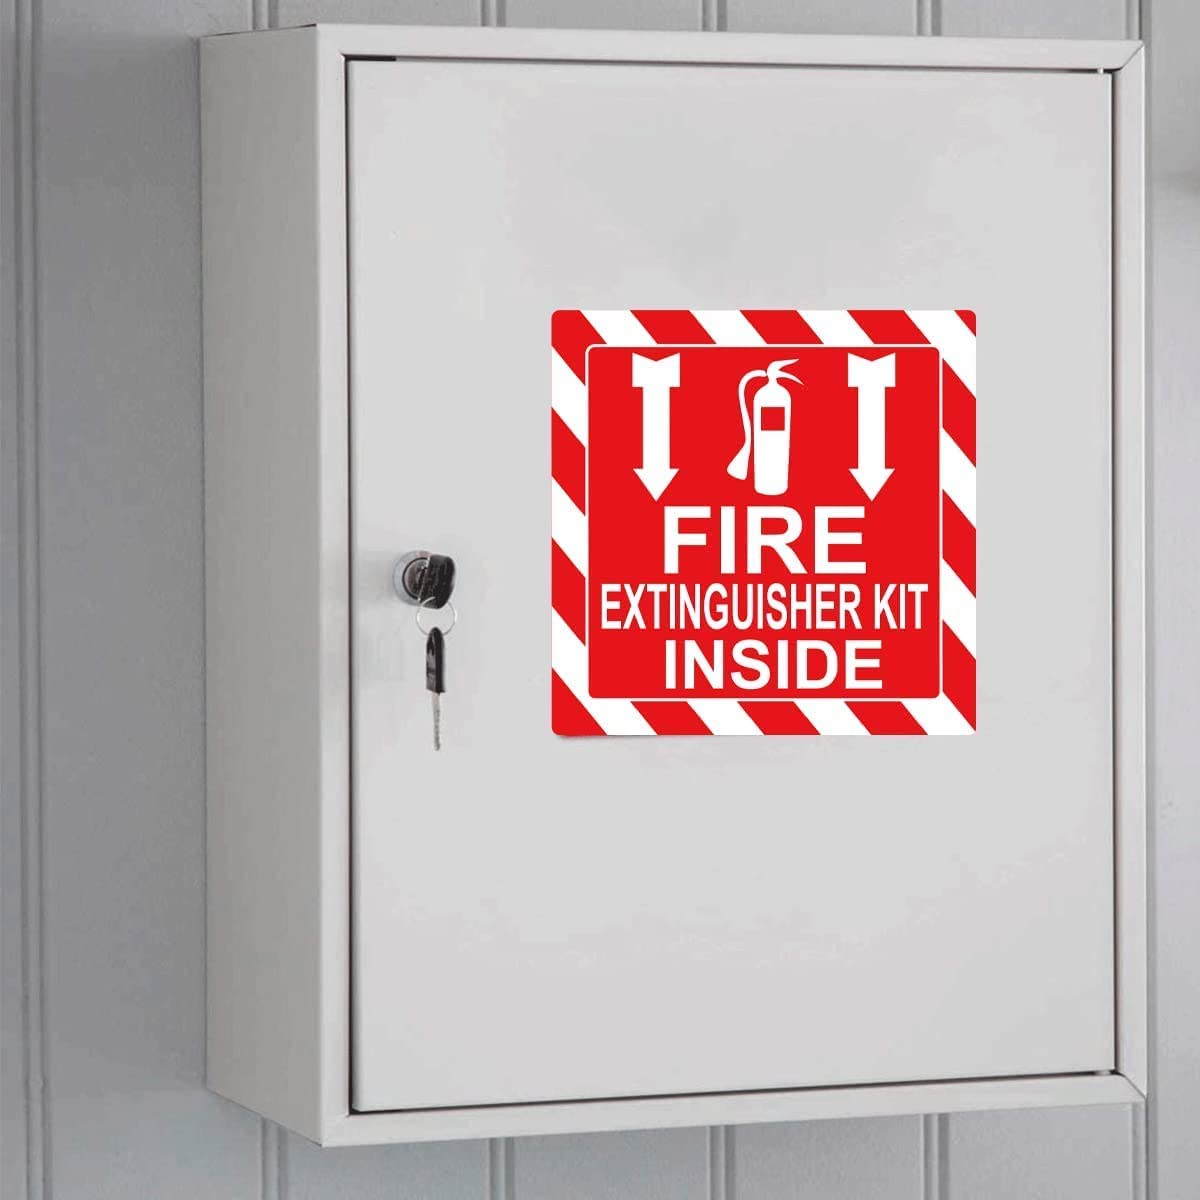 ستيكر لاصق مطبوع بعبارة Fire Extinguisher Inside First Aid Kit Inside